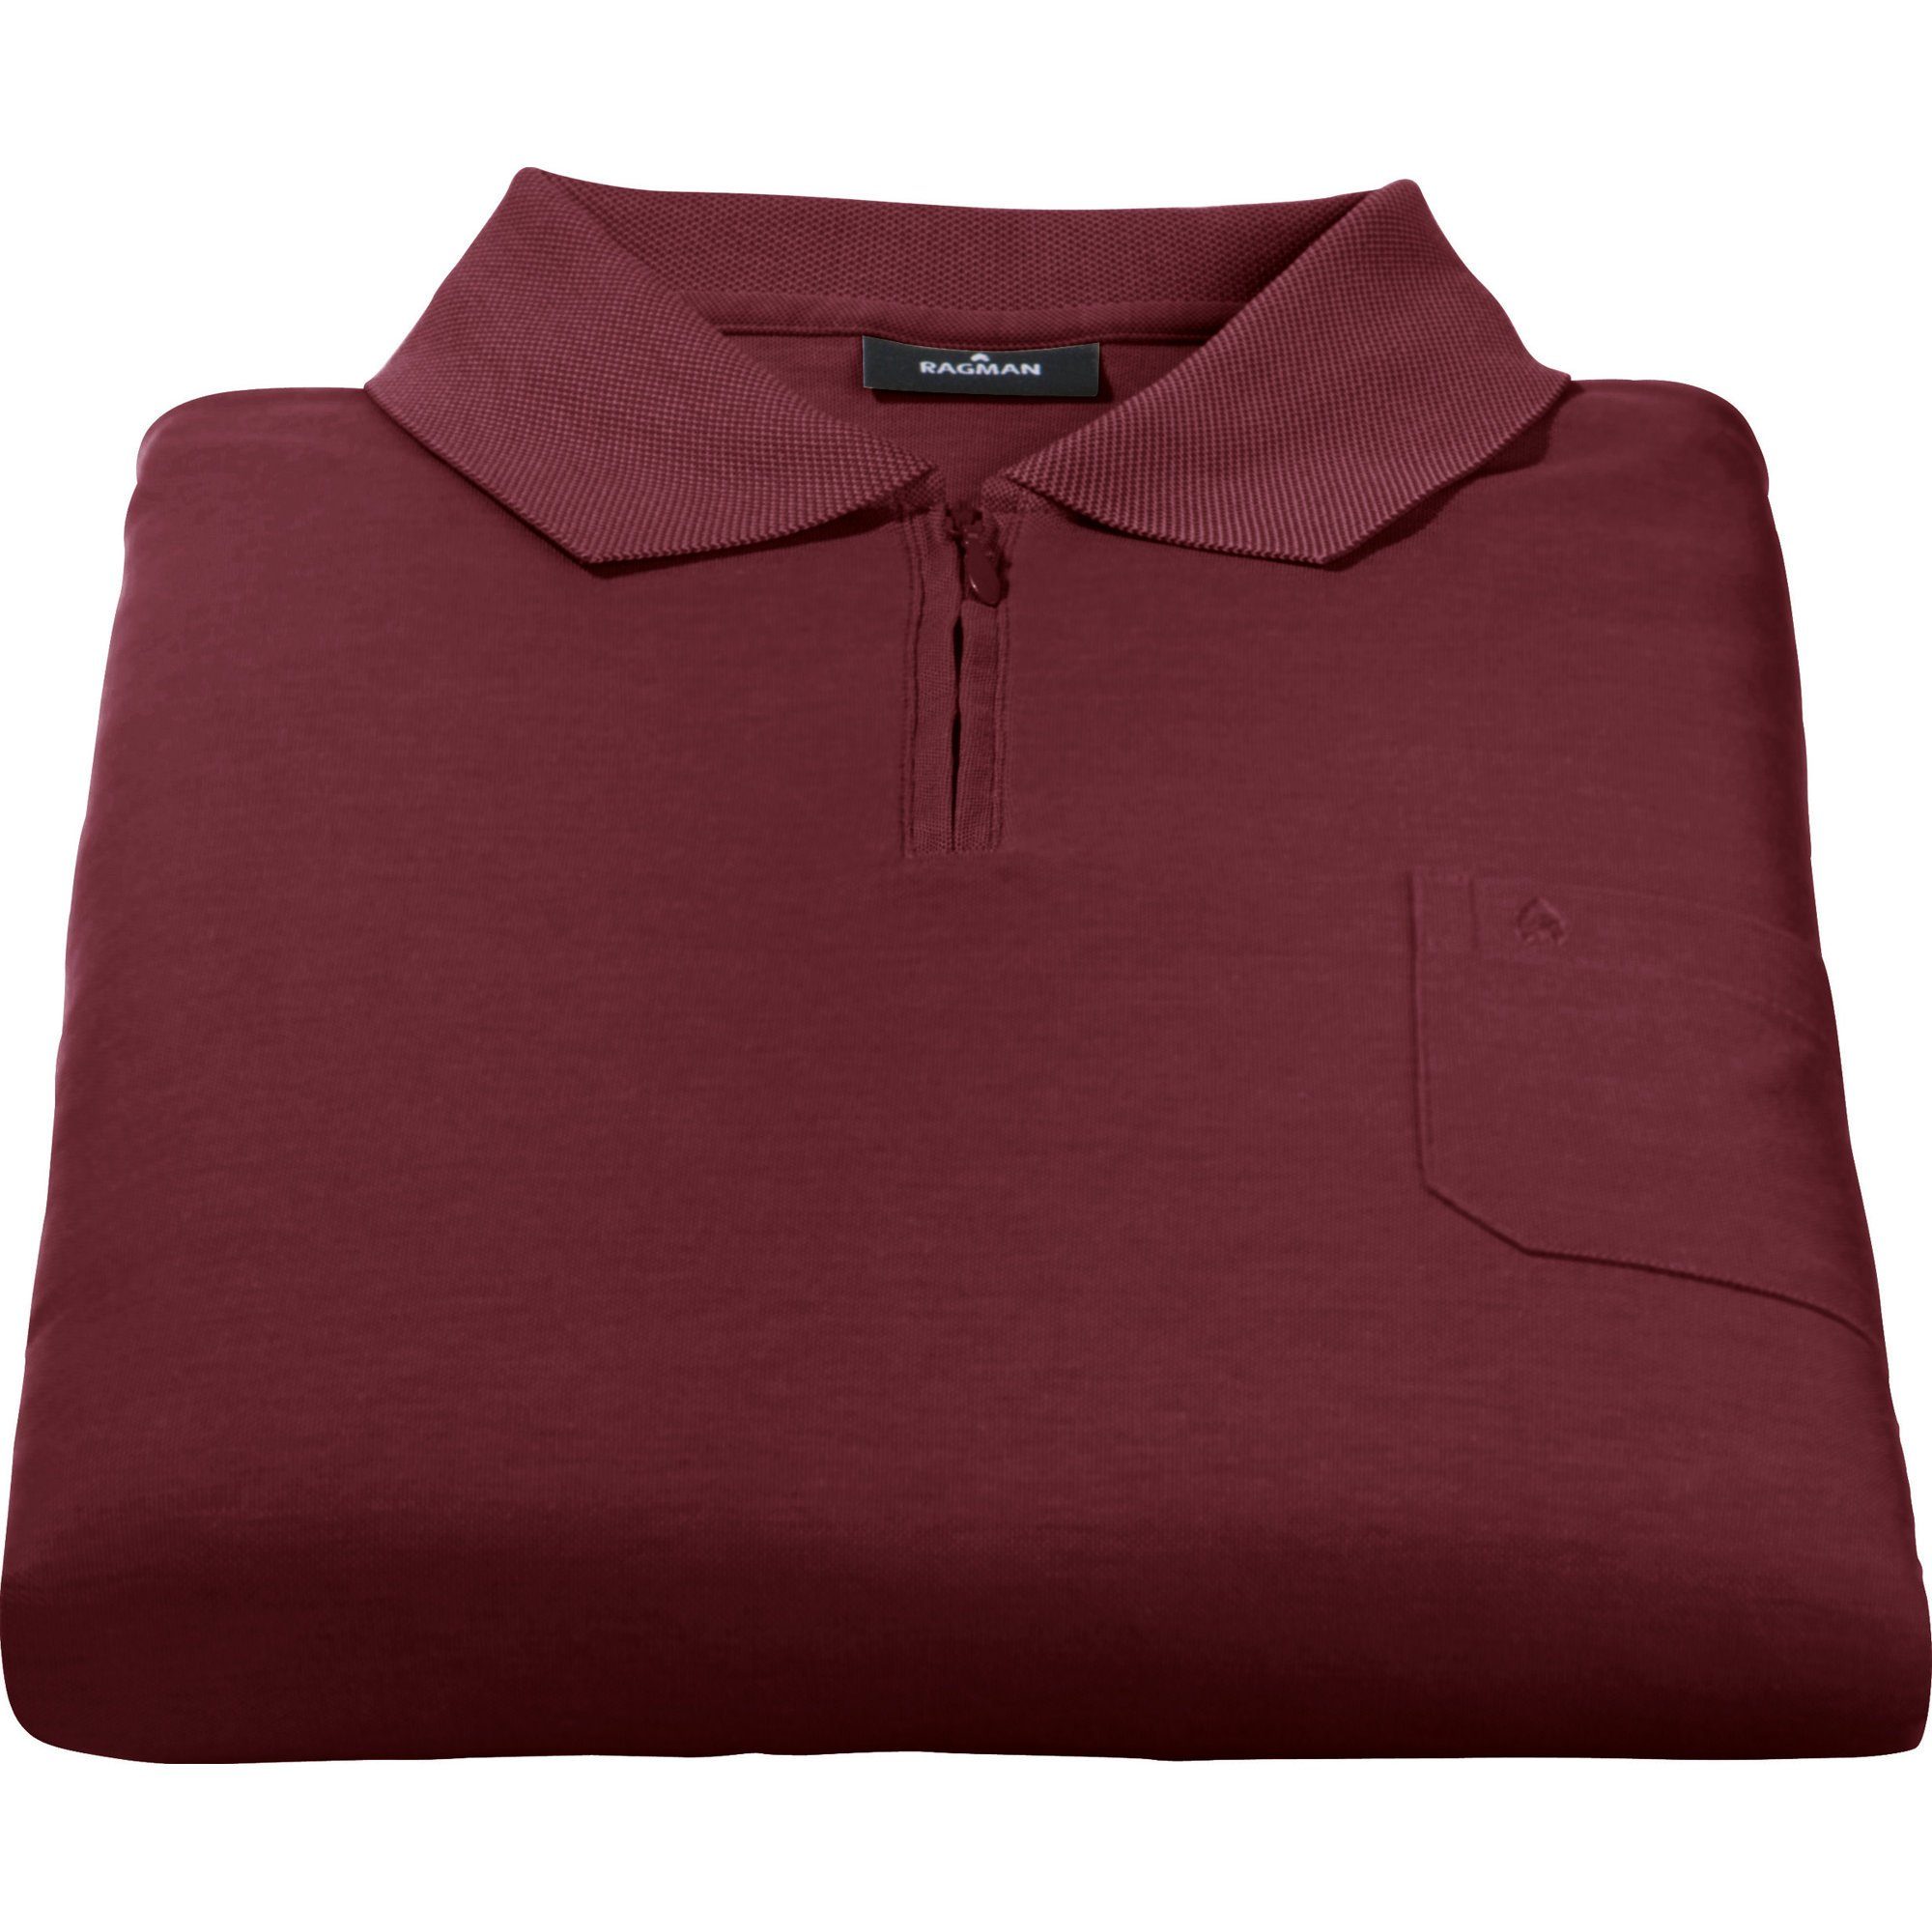 RAGMAN Sweatshirt Herren-Poloshirt rubin Uni